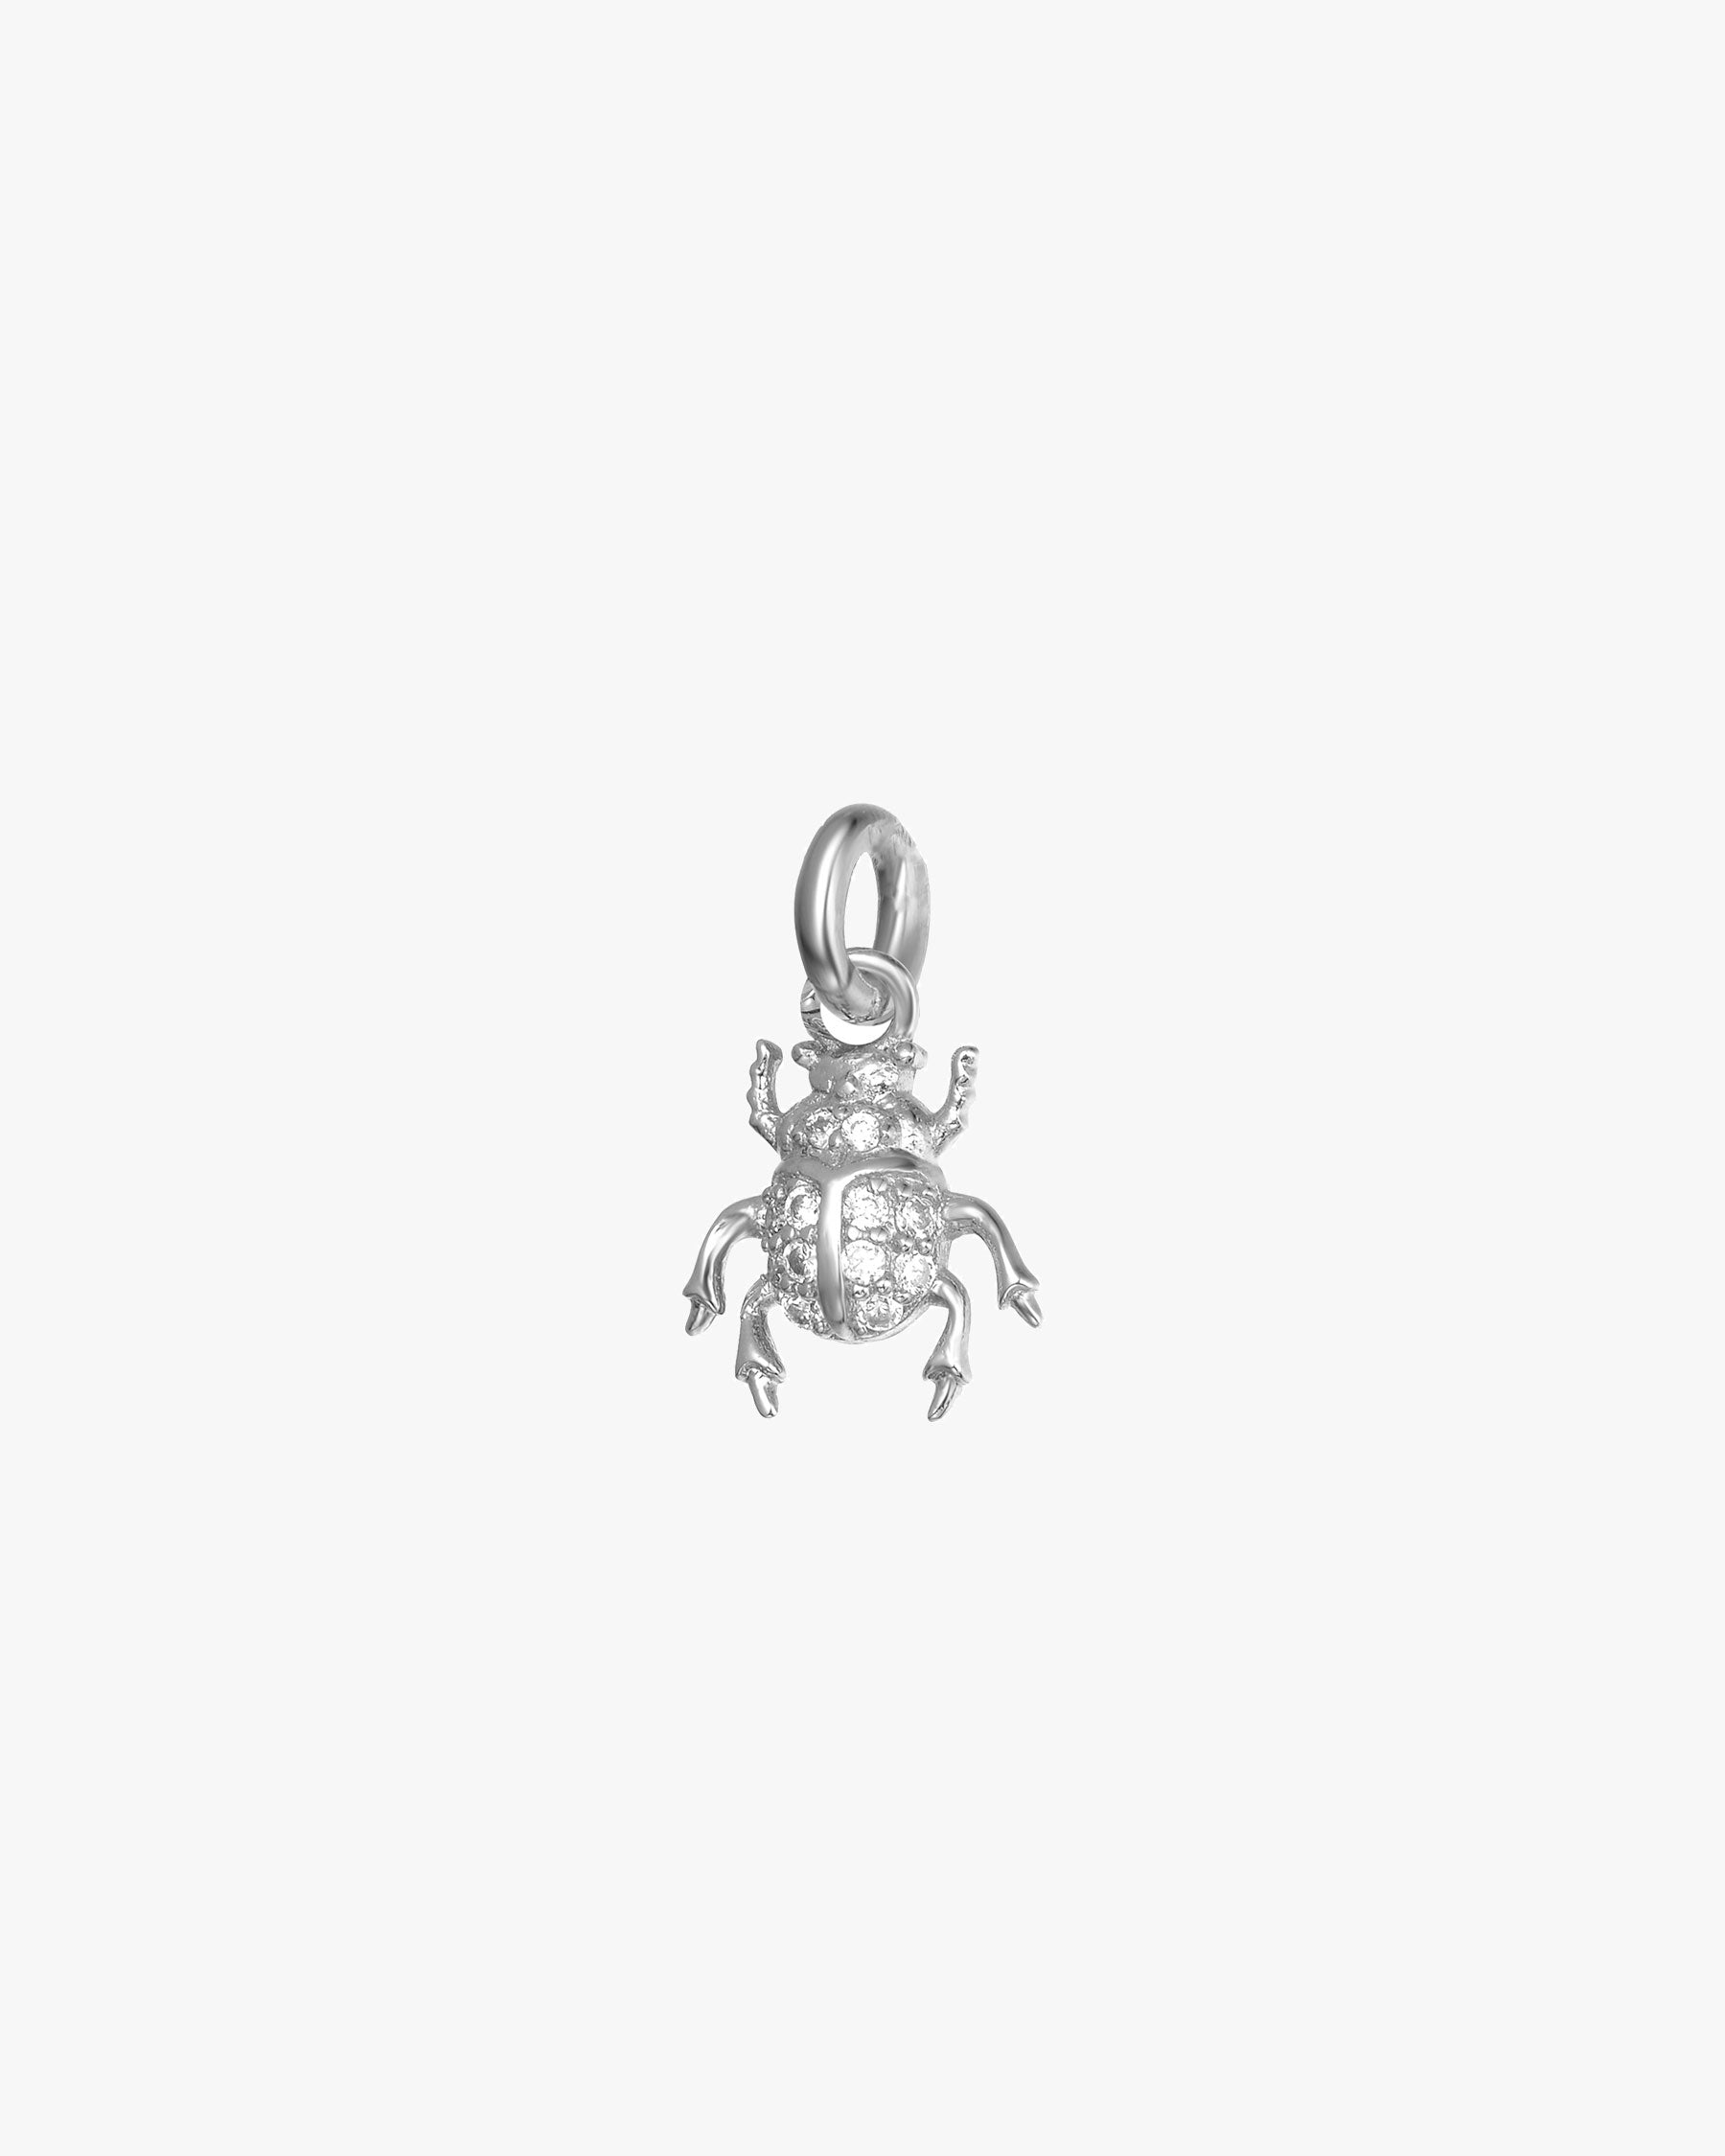 Charm Beetle | The Gray Box